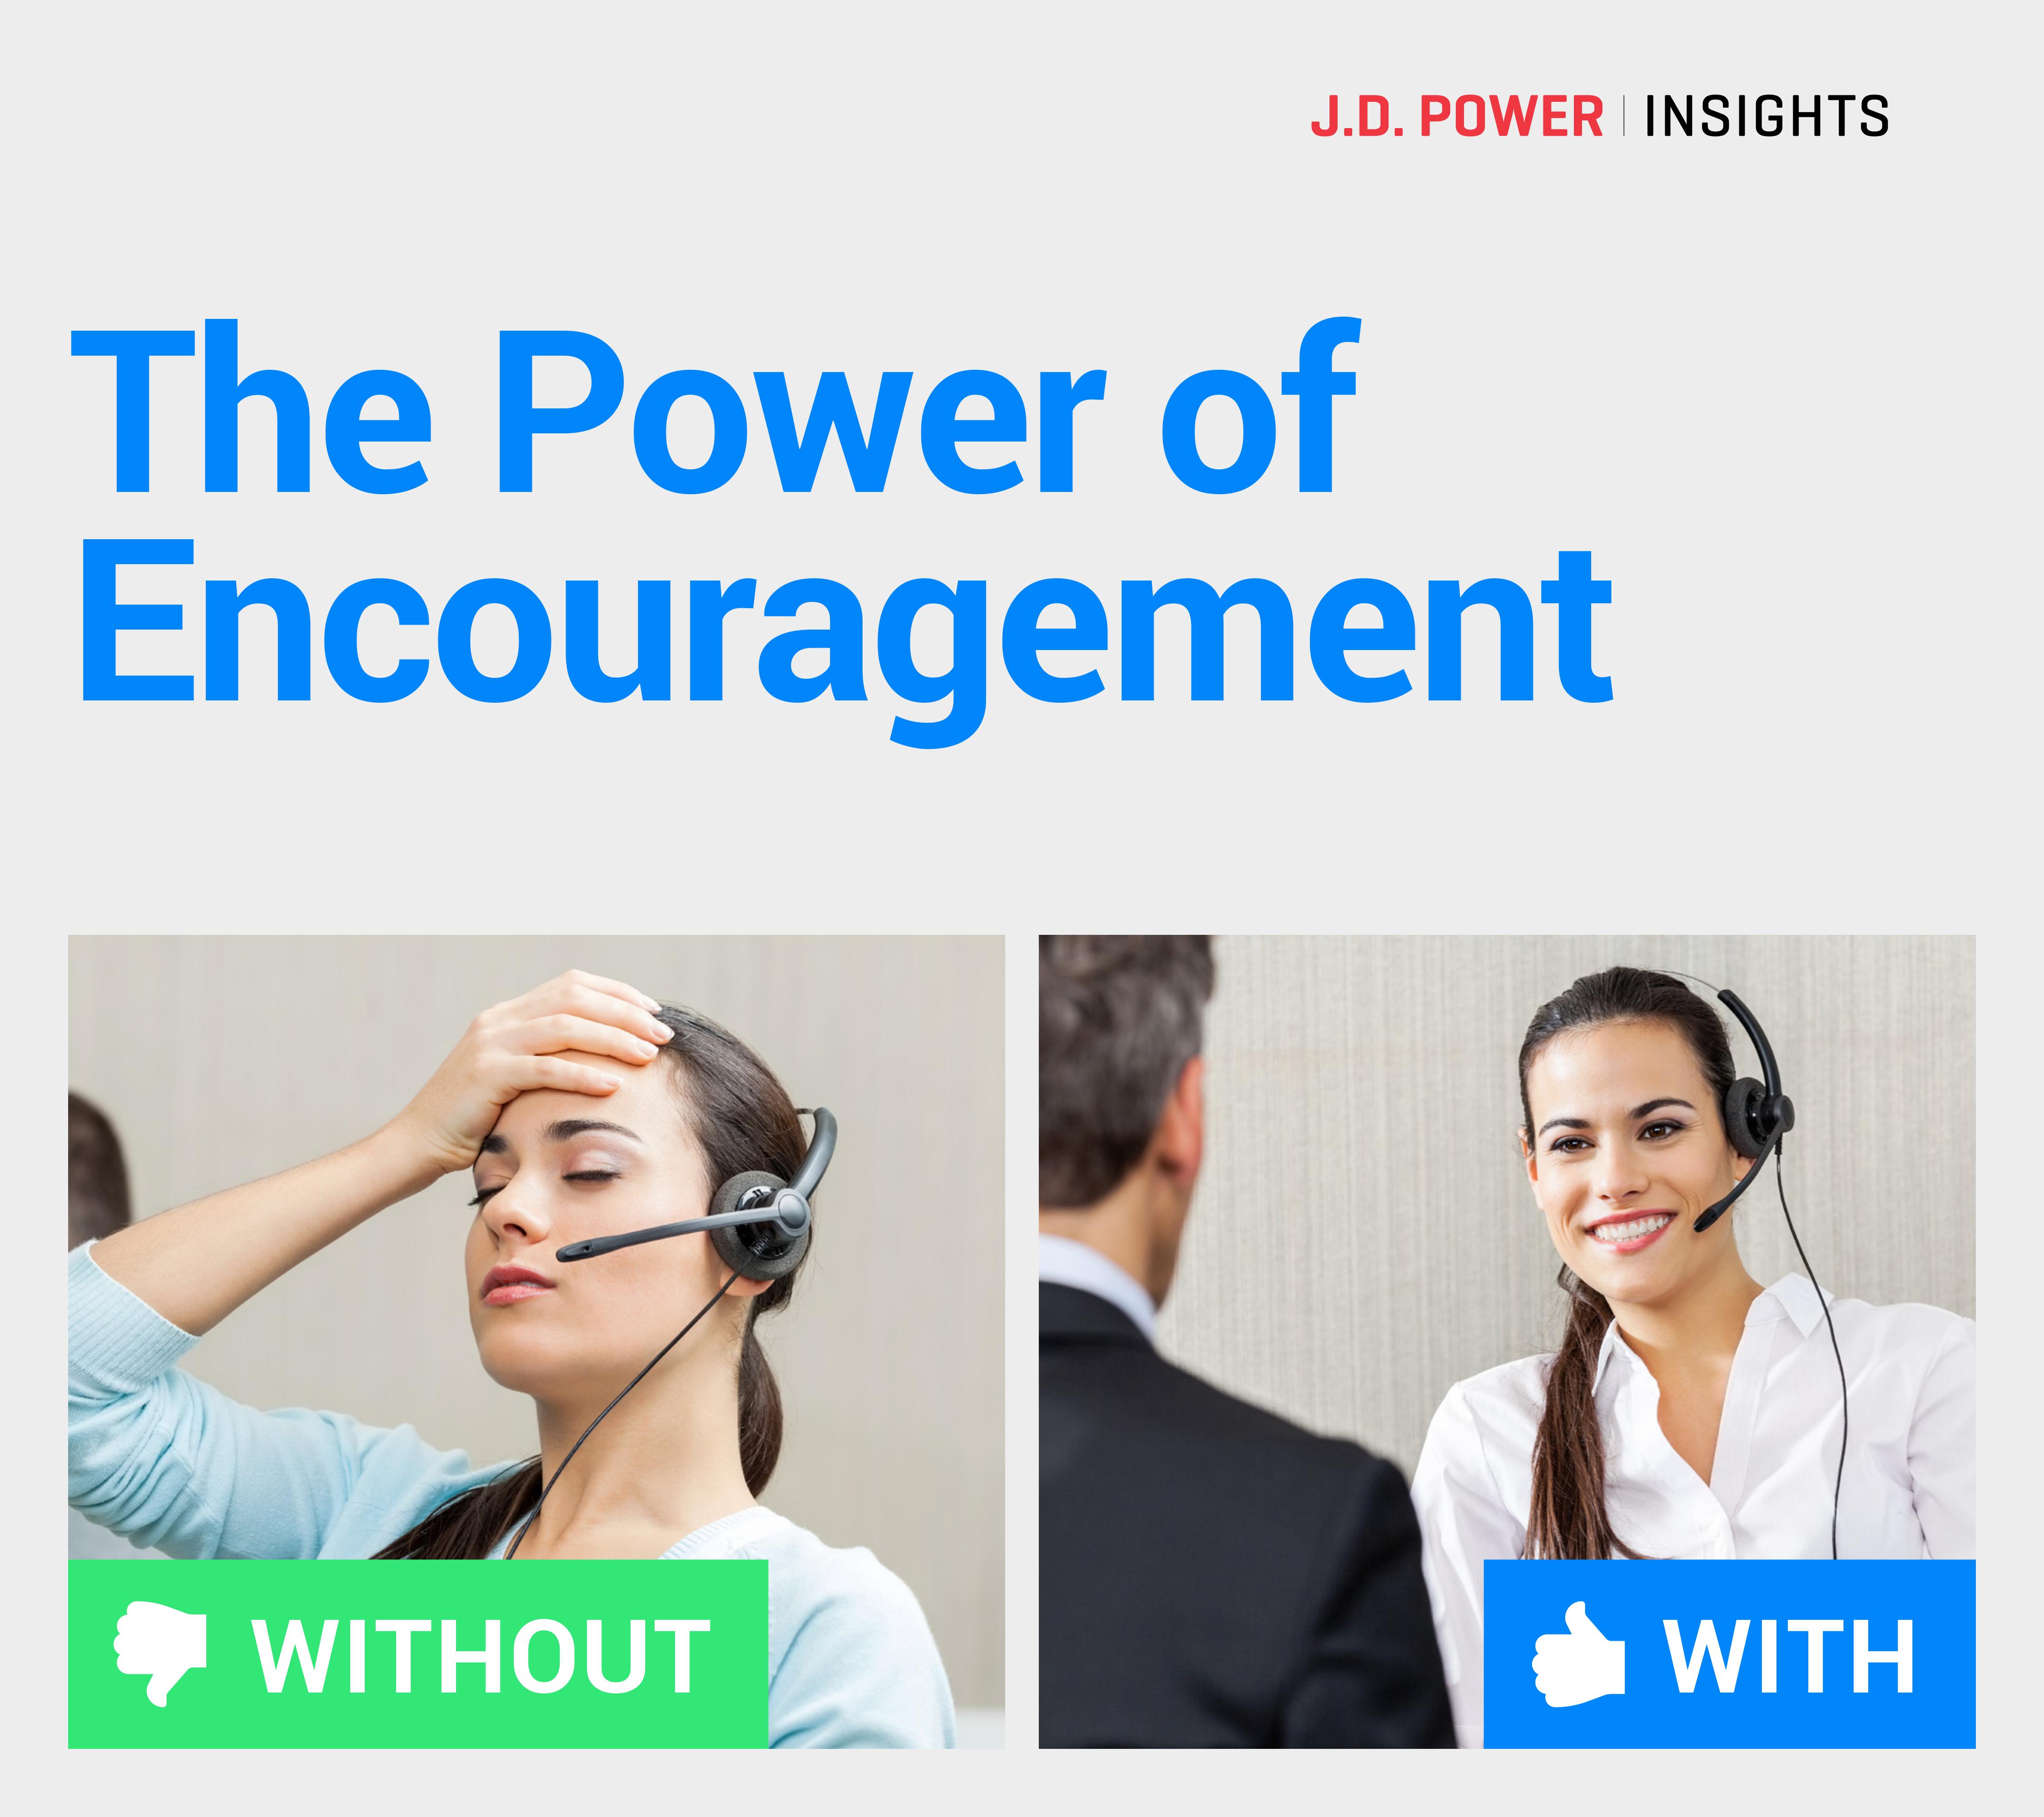 The Power of encouragment 2.0